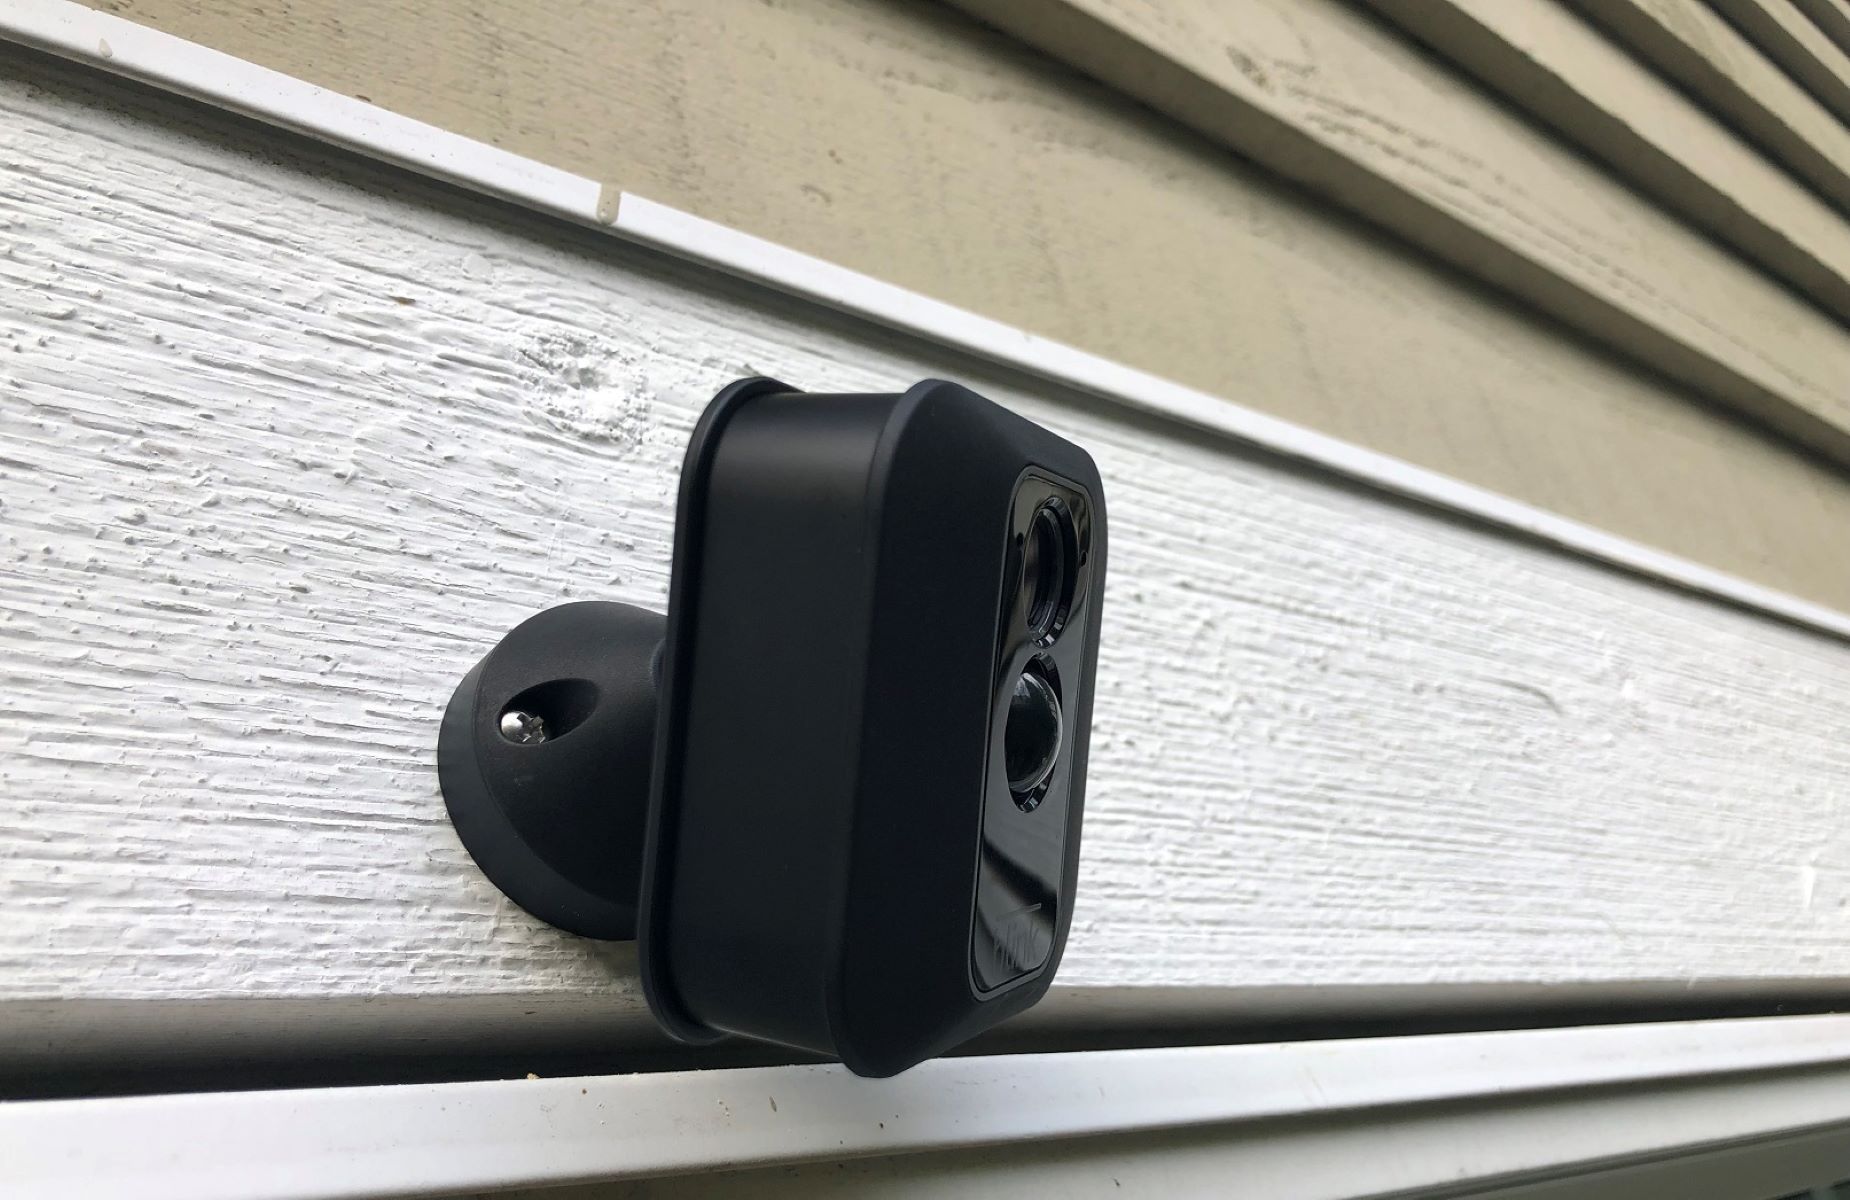 How Do I Reset My Blink Outdoor Camera